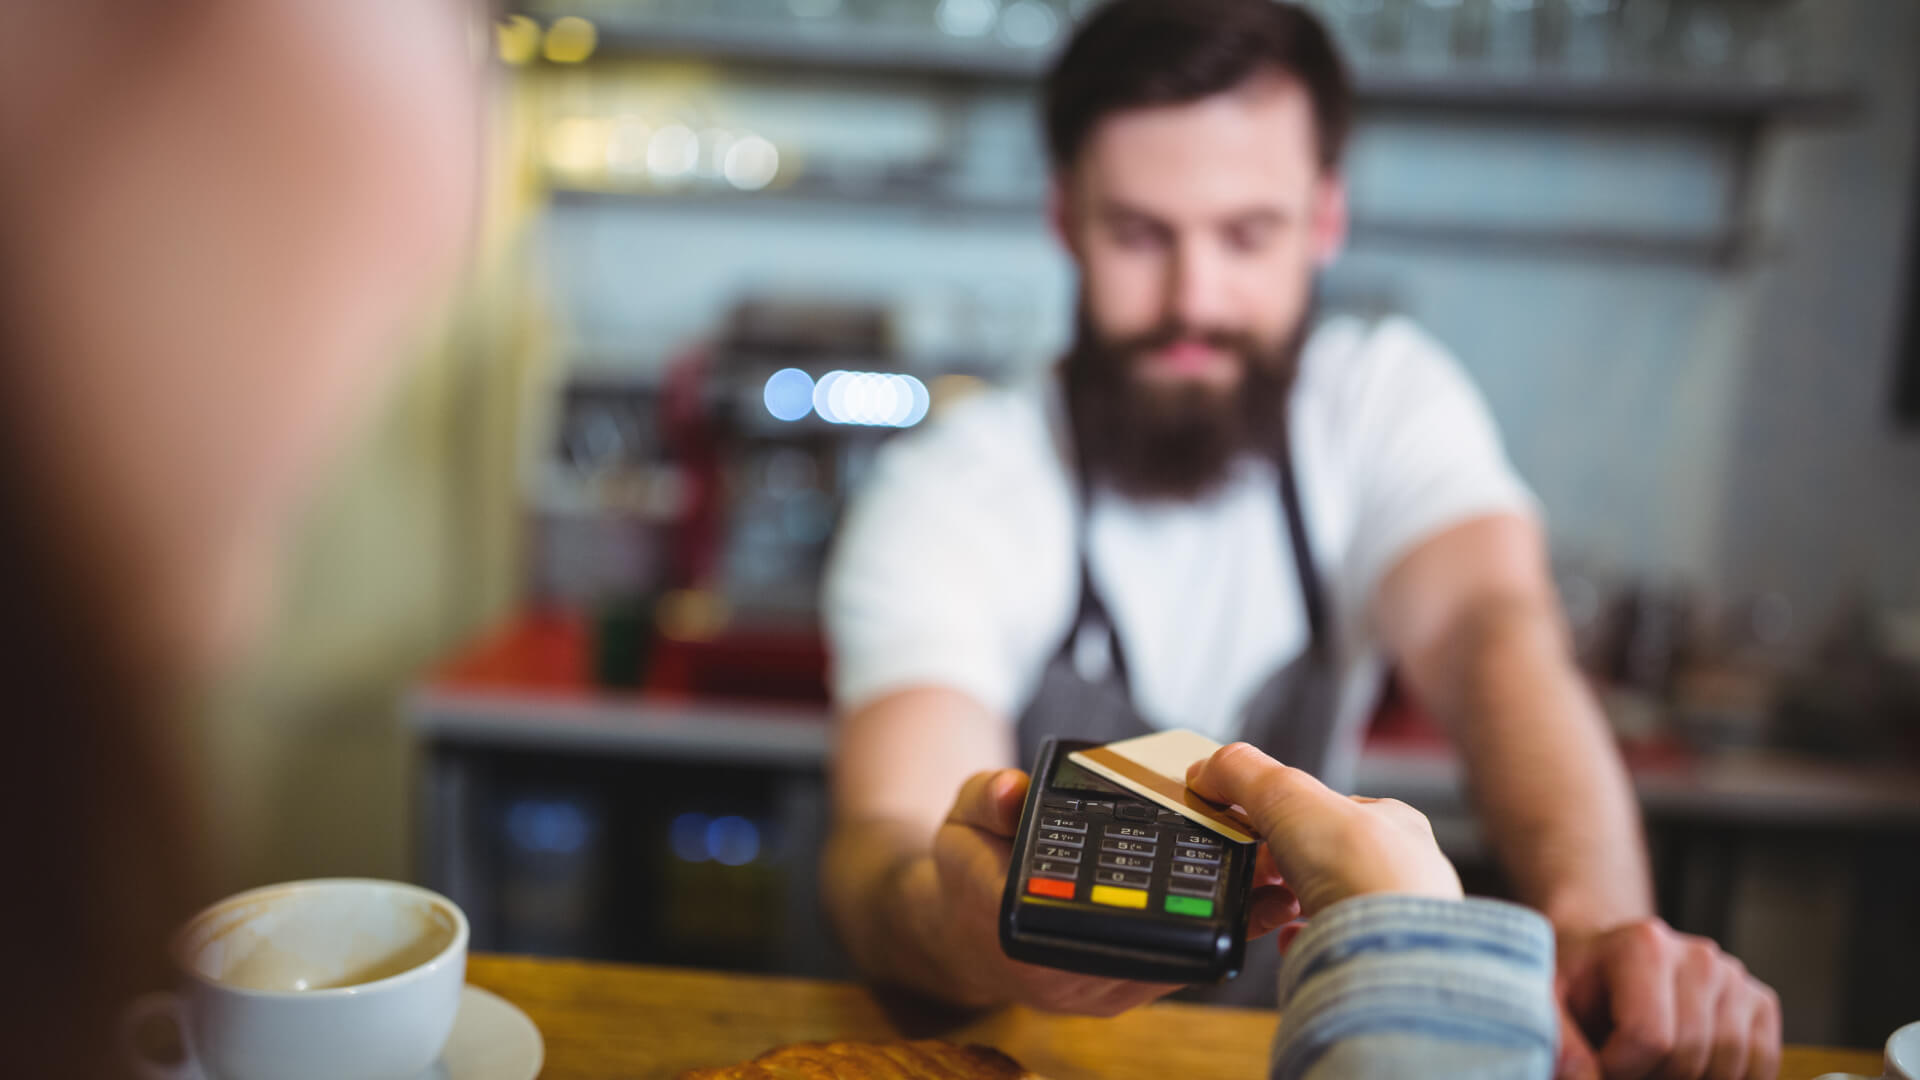 customer-making-payment-through-payment-terminal-counter